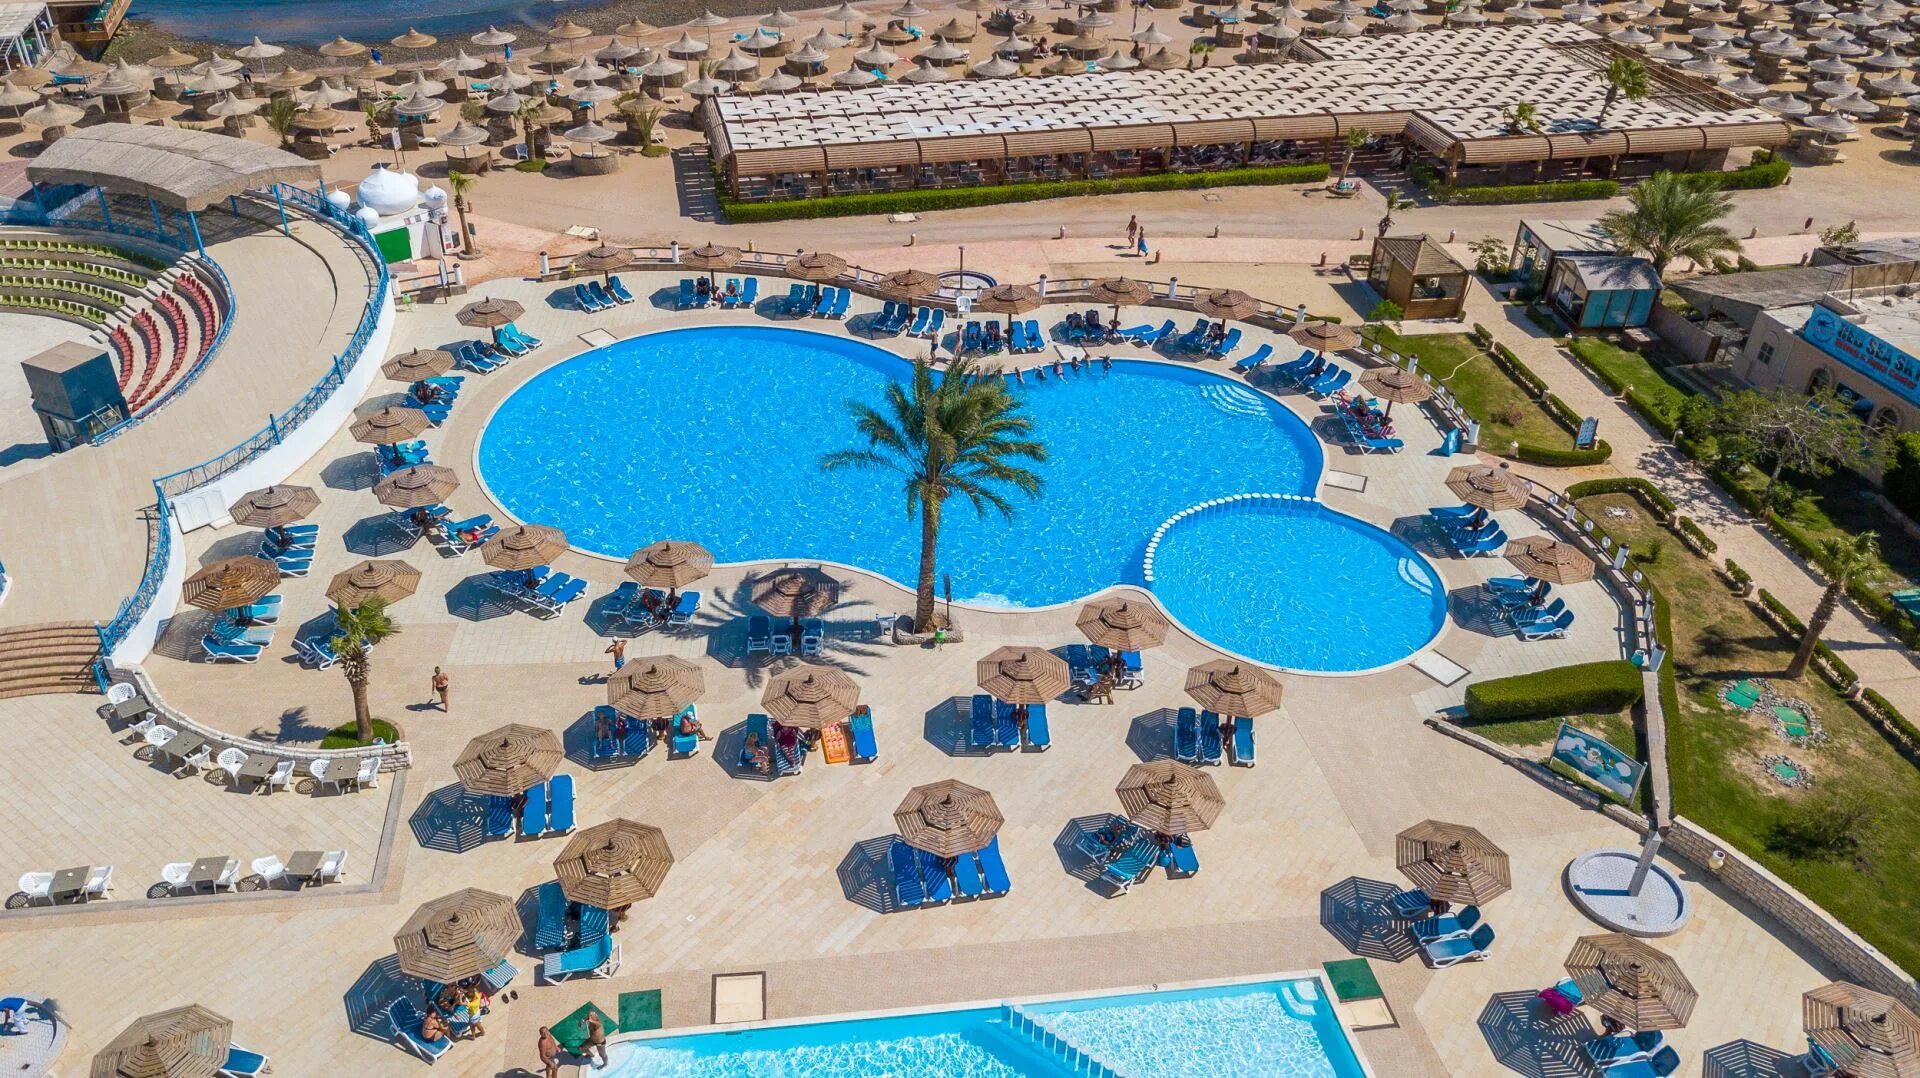 Aladdin resort hurghada 4. Отель алладин Хургада Египет. Aladdin Beach Resort Hurghada 4 Хургада. Египет алладин Бич Резорт 4. Египет отель алладин 4 Хургада.